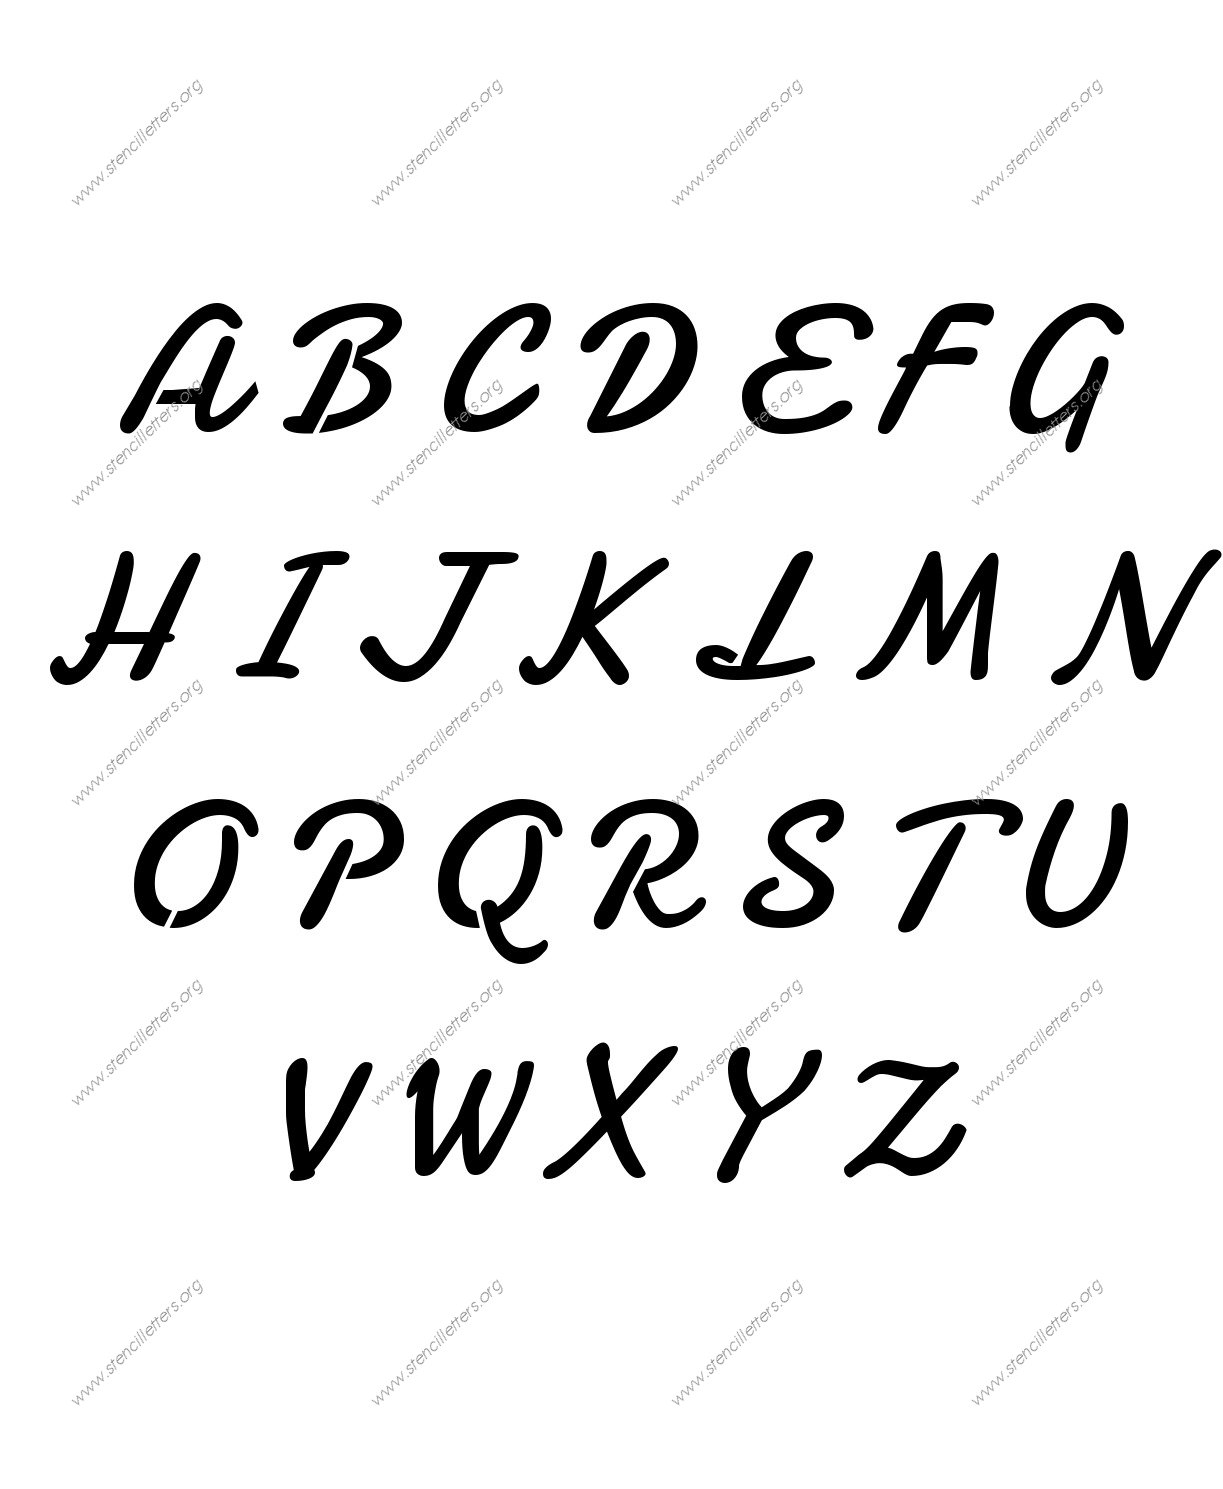 Display Script Cursive Stencil Letter Set